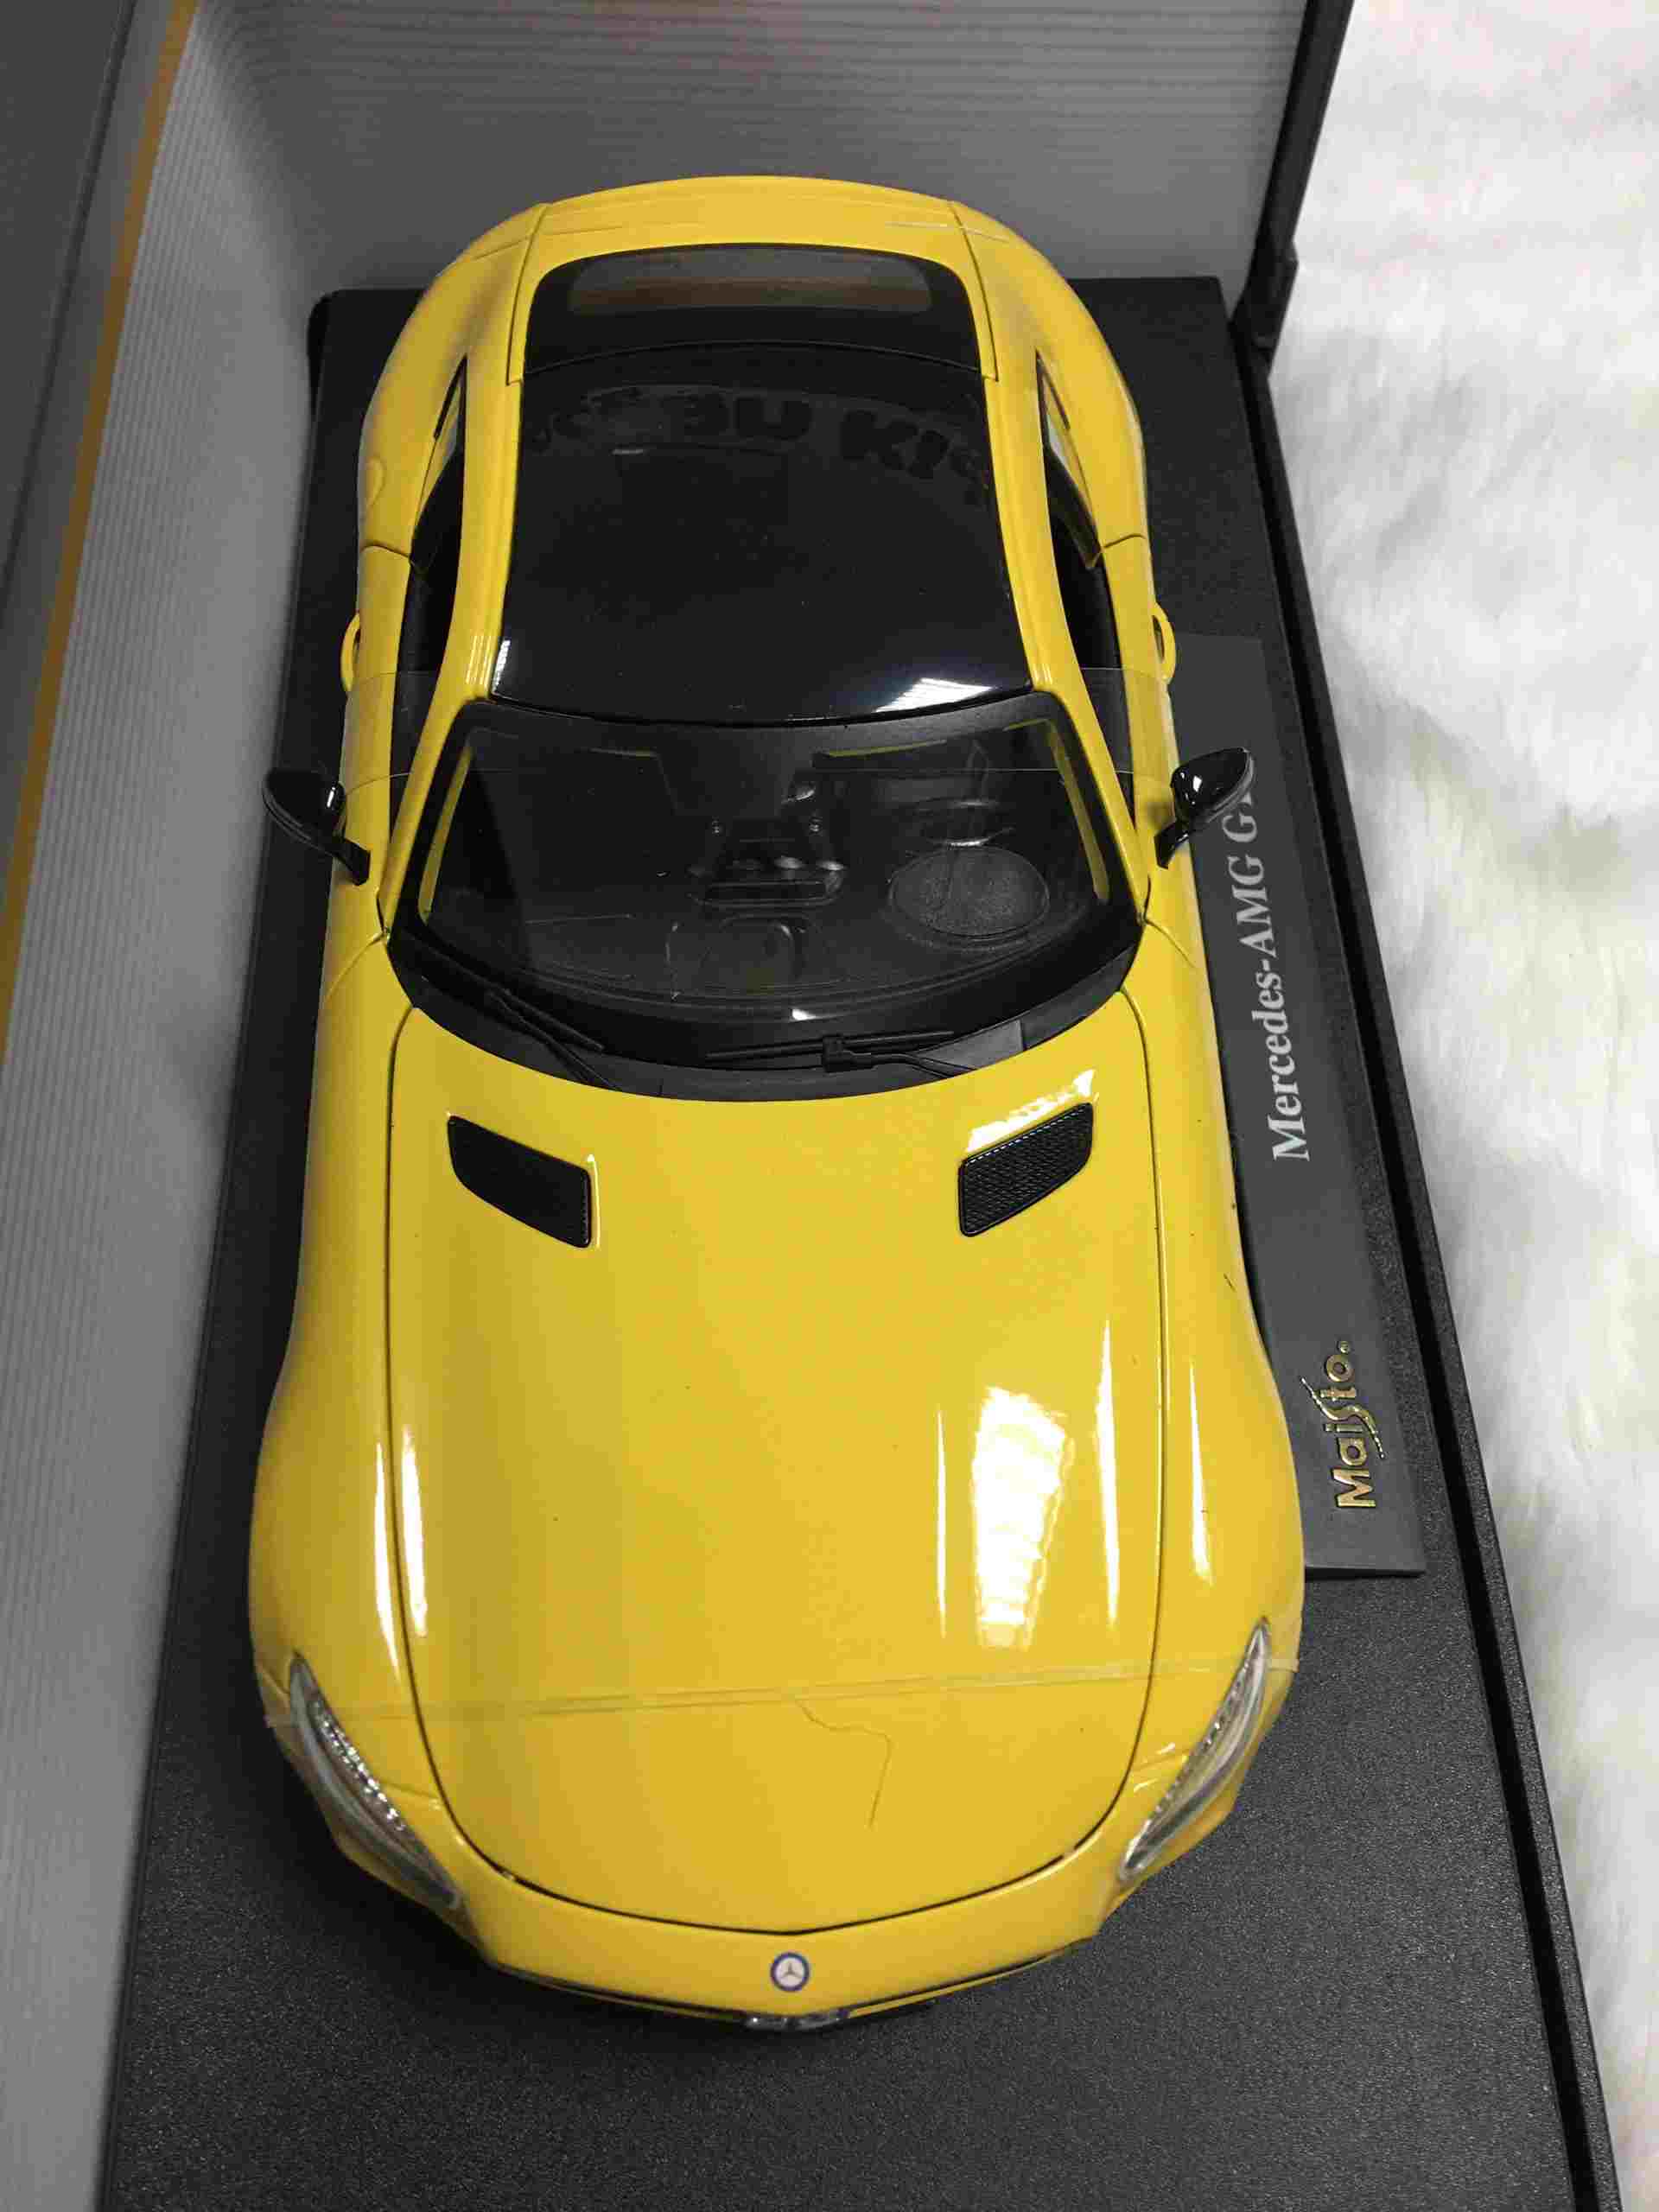 SP005481 - [Maisto] Mercedes AMG GT 118 [Yellow]